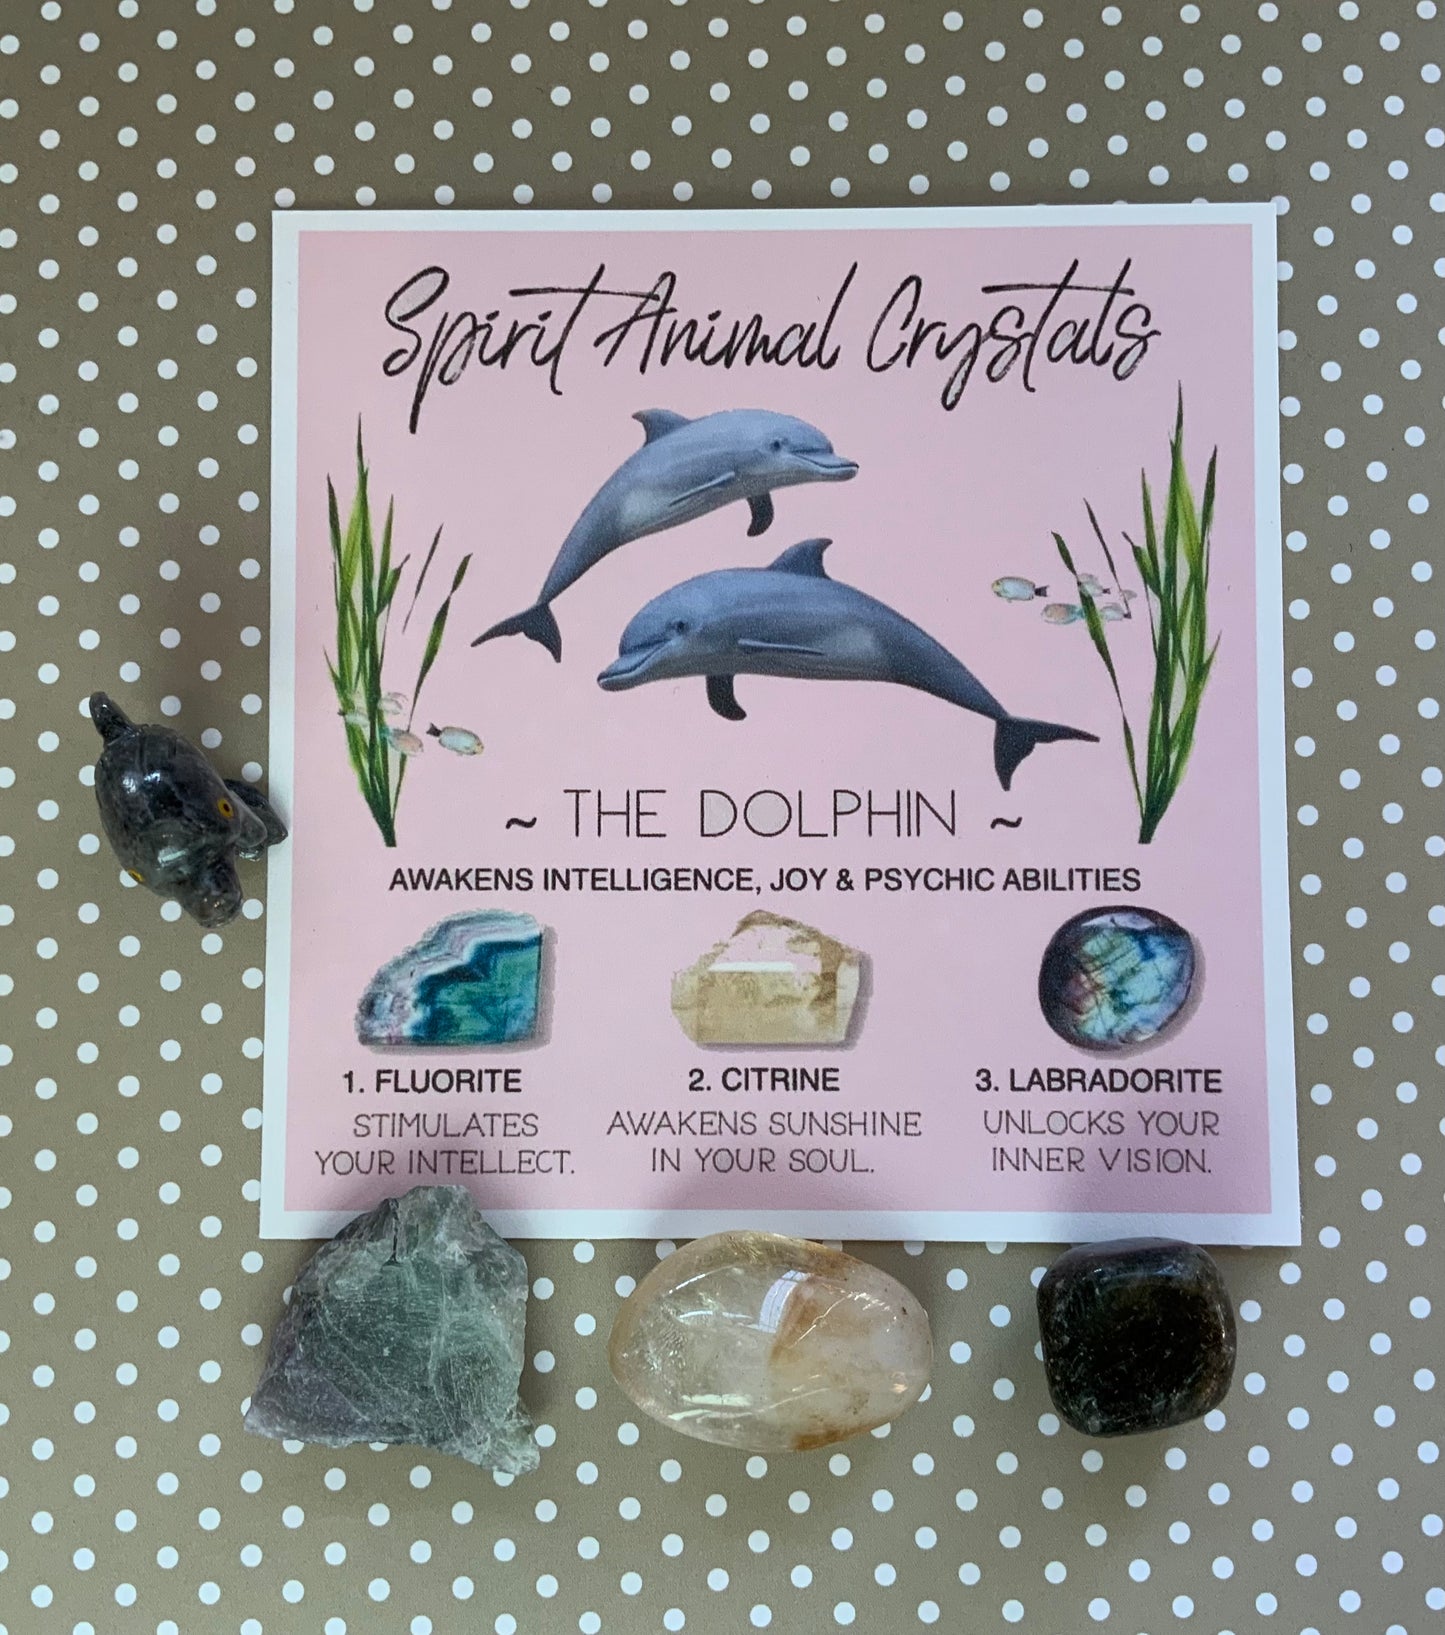 Spirit animal crystal gift set - The Dolphin